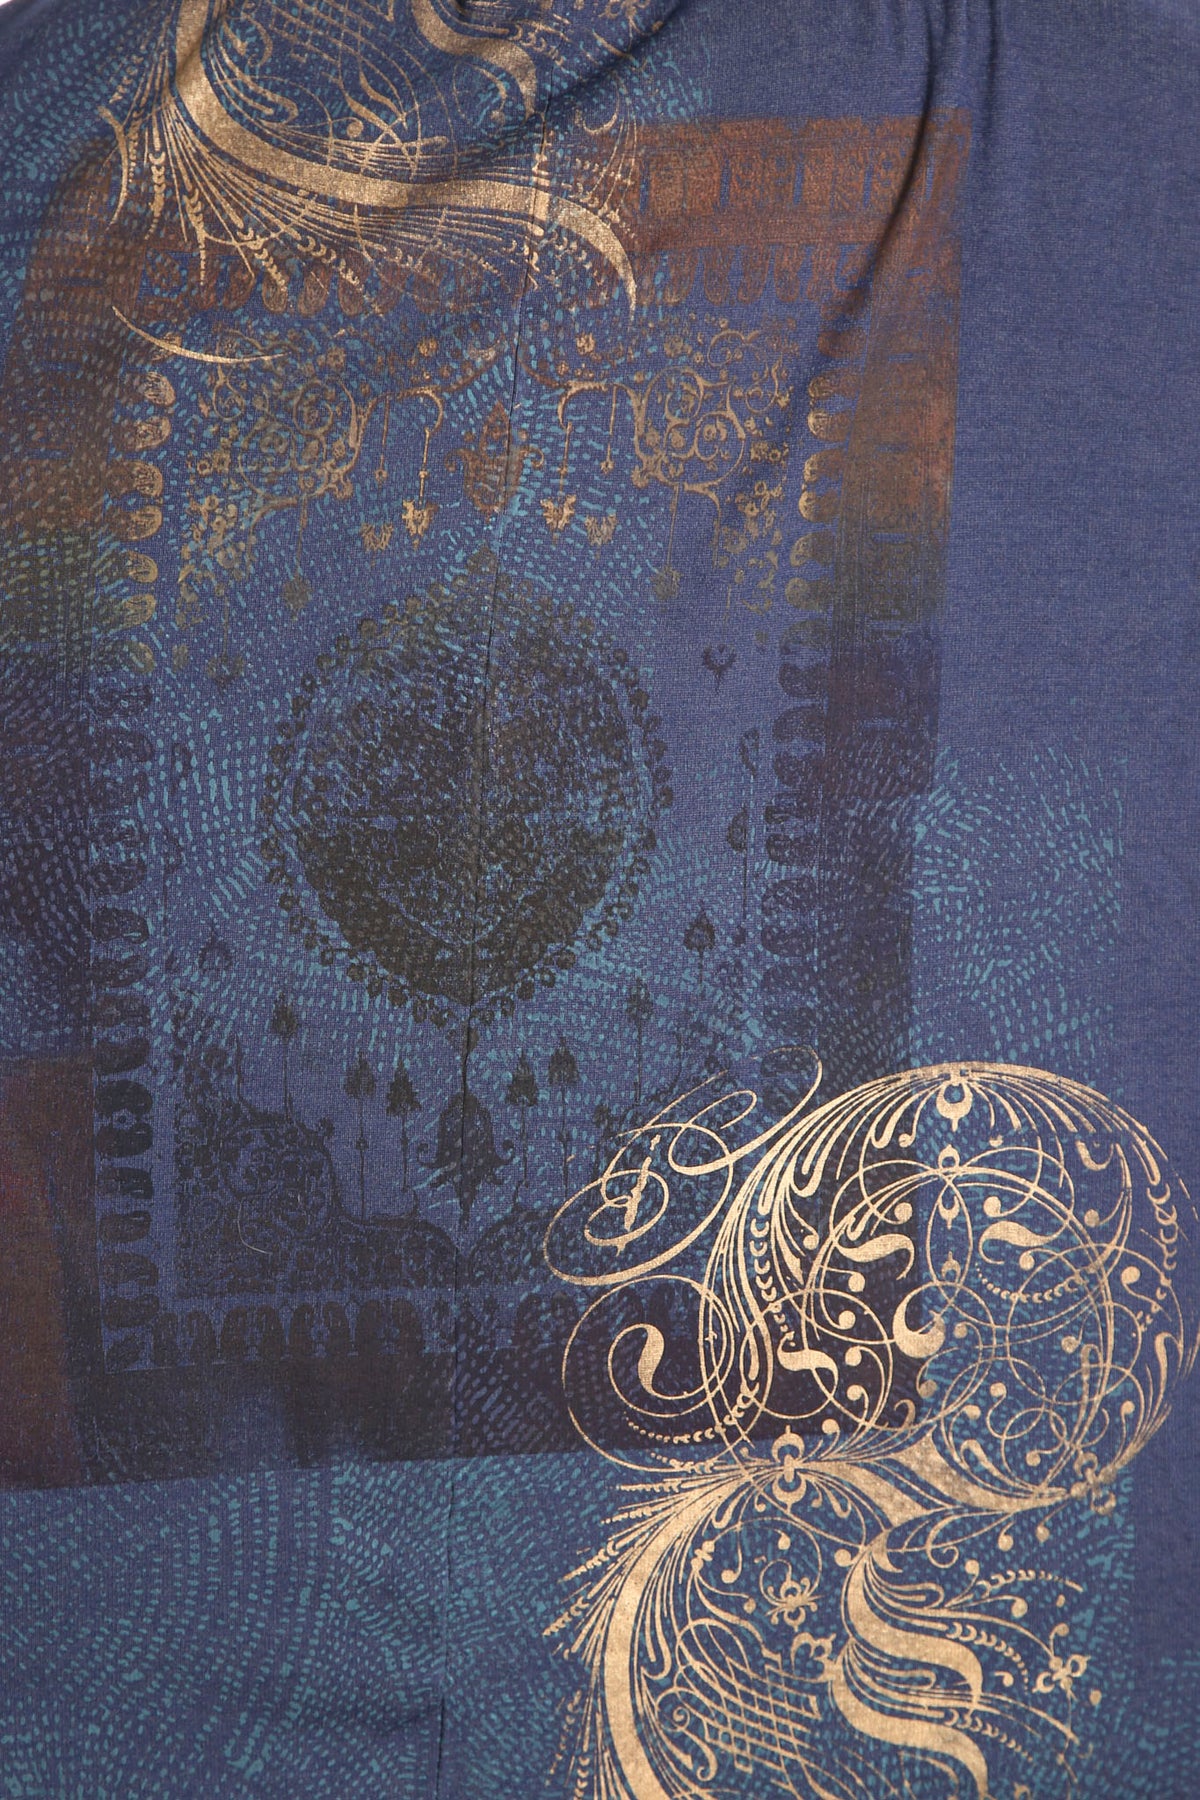 5249 Pocket Cardigan New Verona/Mood indigo- ink and loom print -P